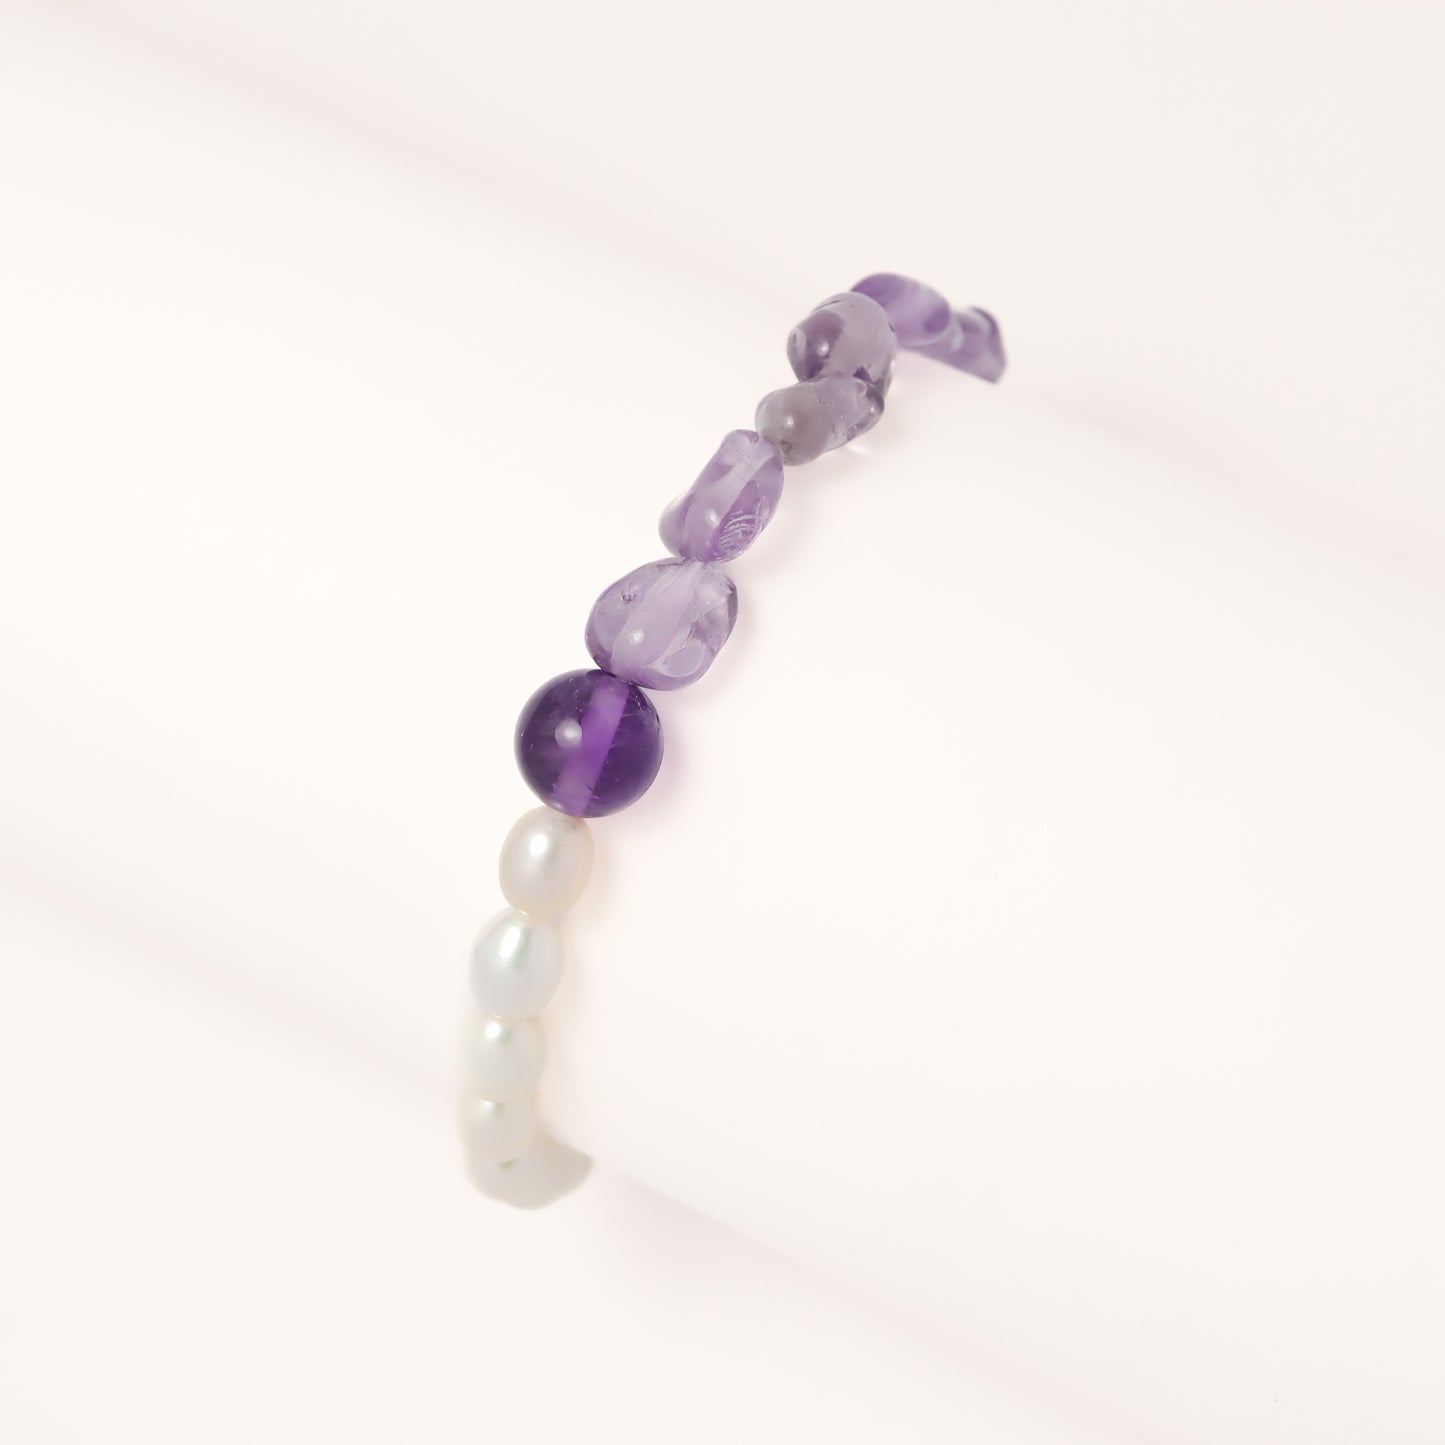 Diana Blessing - Lavender Amethyst & Freshwater Pearl Bracelet with Hook Lock